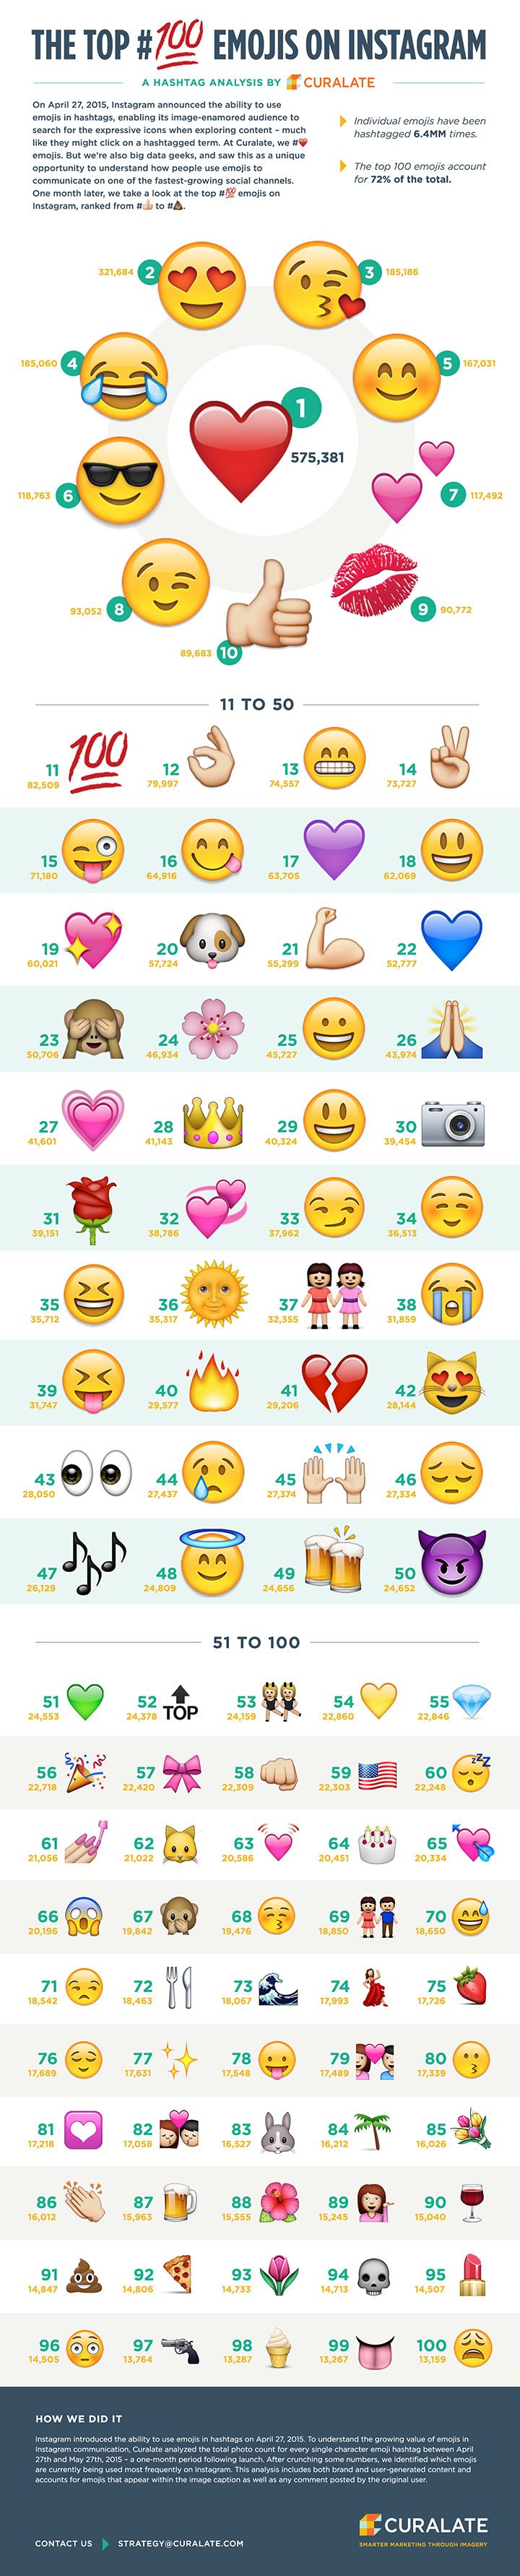 100 most popular emojis on Instagram infographic